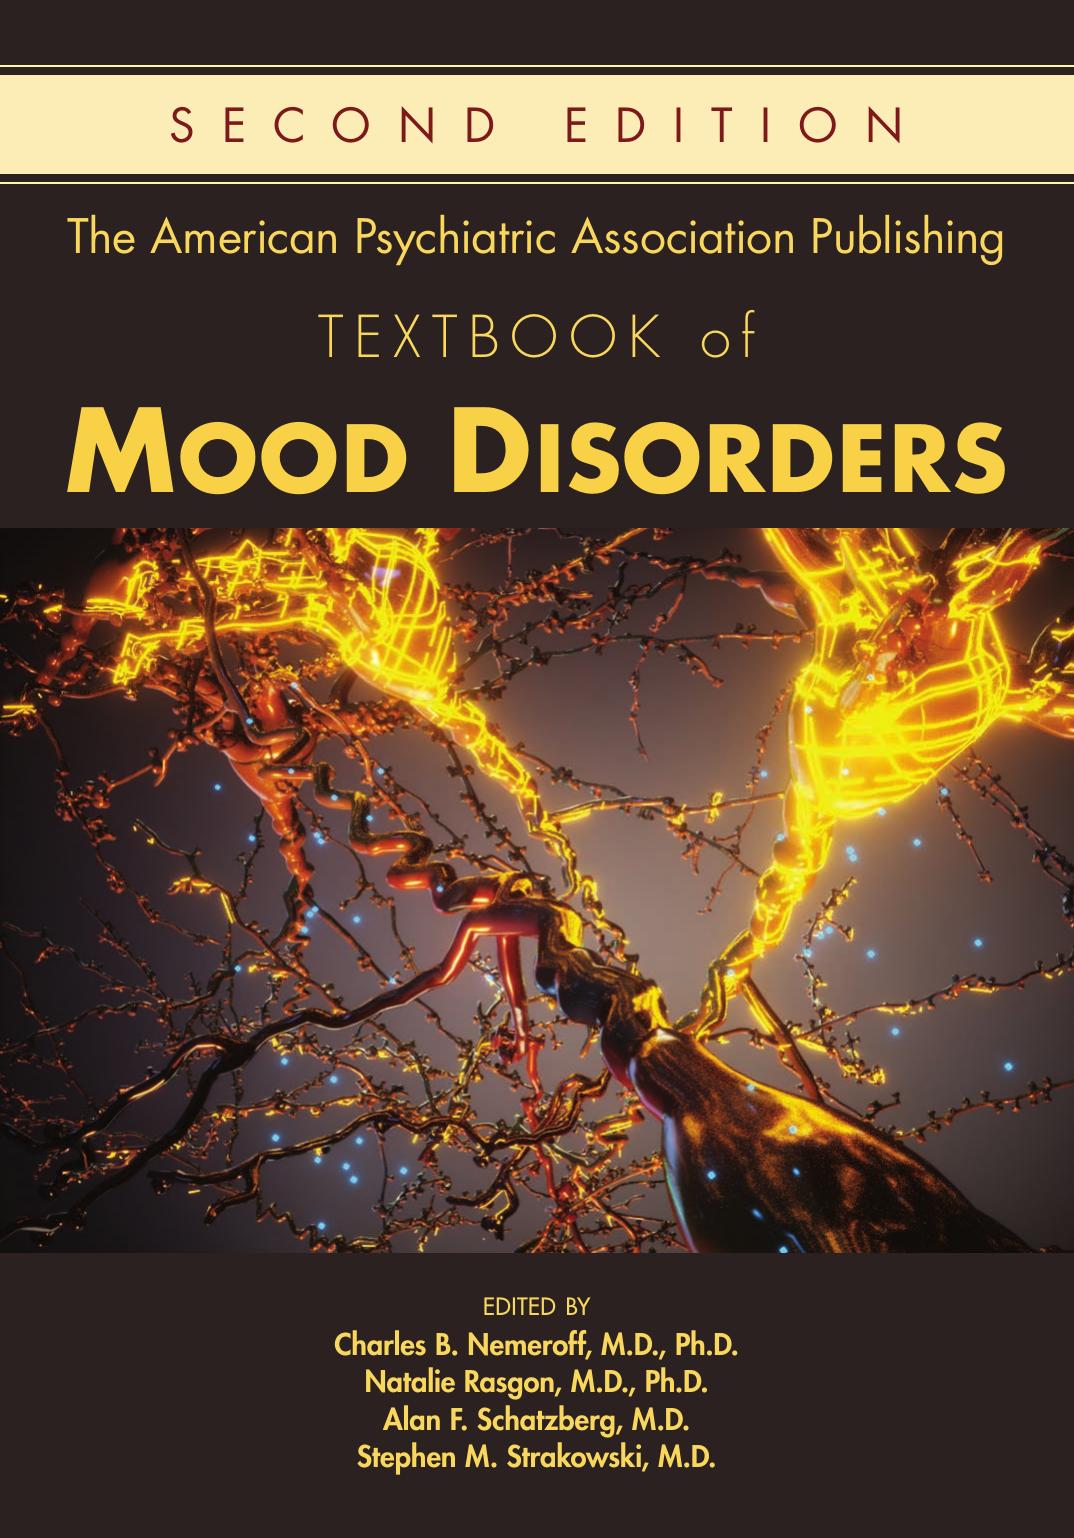 The American Psychiatric Association Publishing Textbook of Mood Disorders, 2nd Edition by Charles B. Nemeroff Natalie Rasgon Alan F. Schatzberg Stephen M. Strakowski